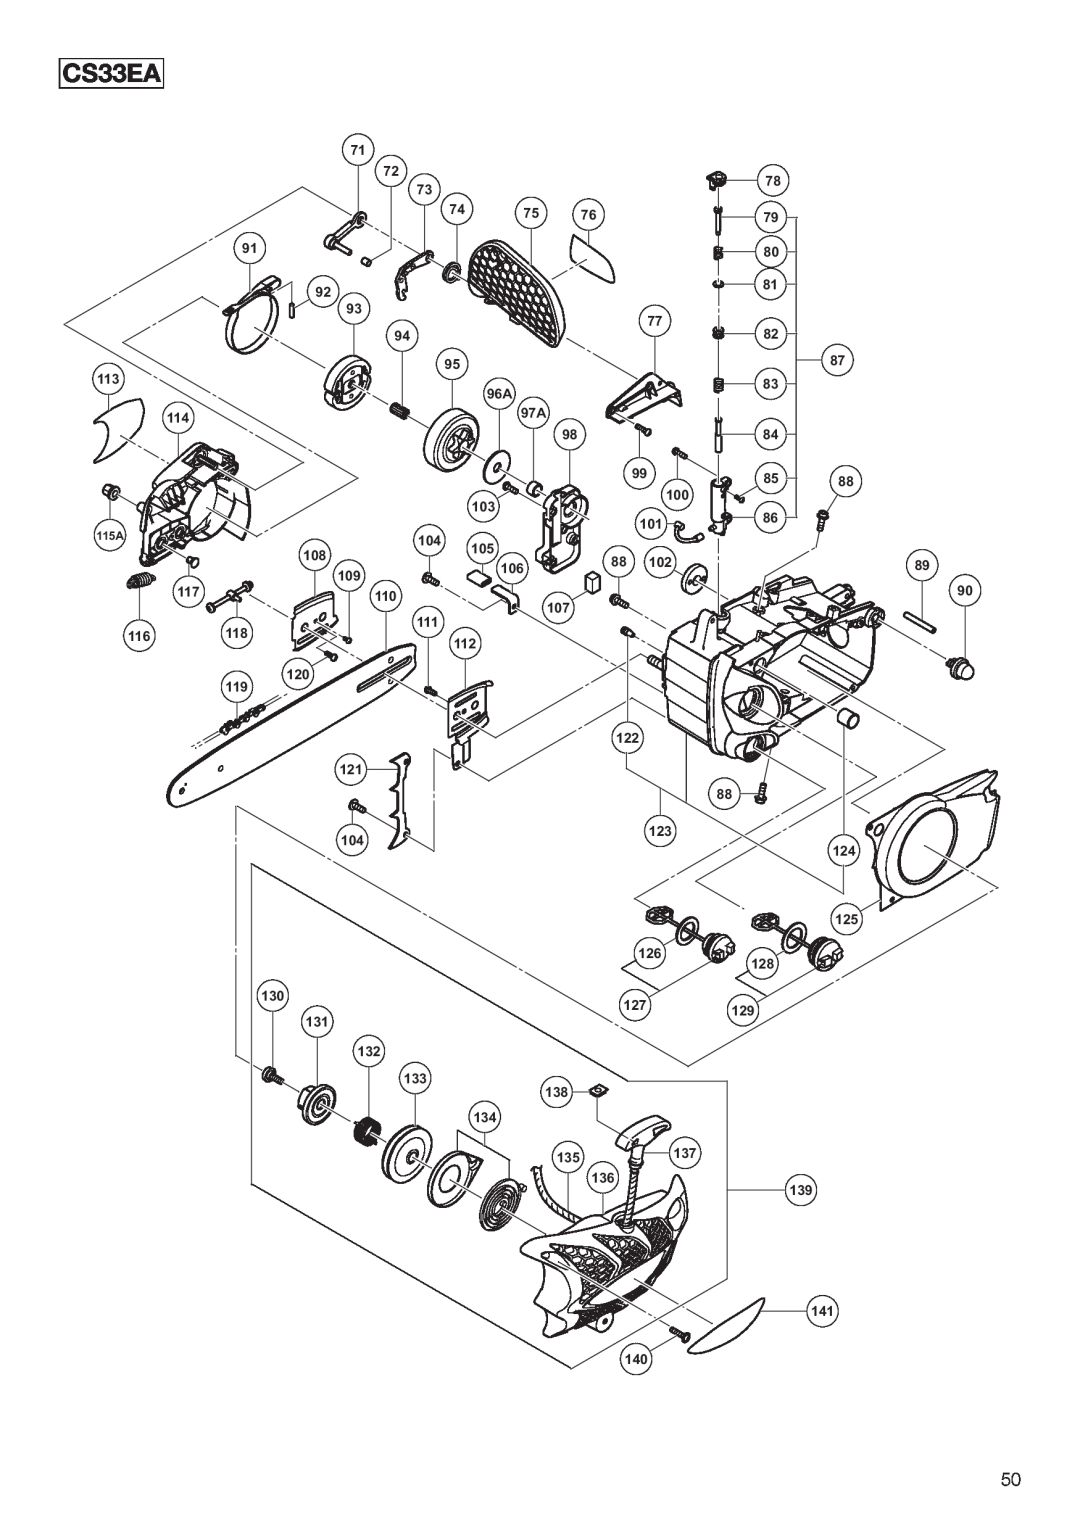 Hitachi Koki USA CS33ET manual #3%, CS33EA2/3, 䎵䏈䏙䎑䎕 